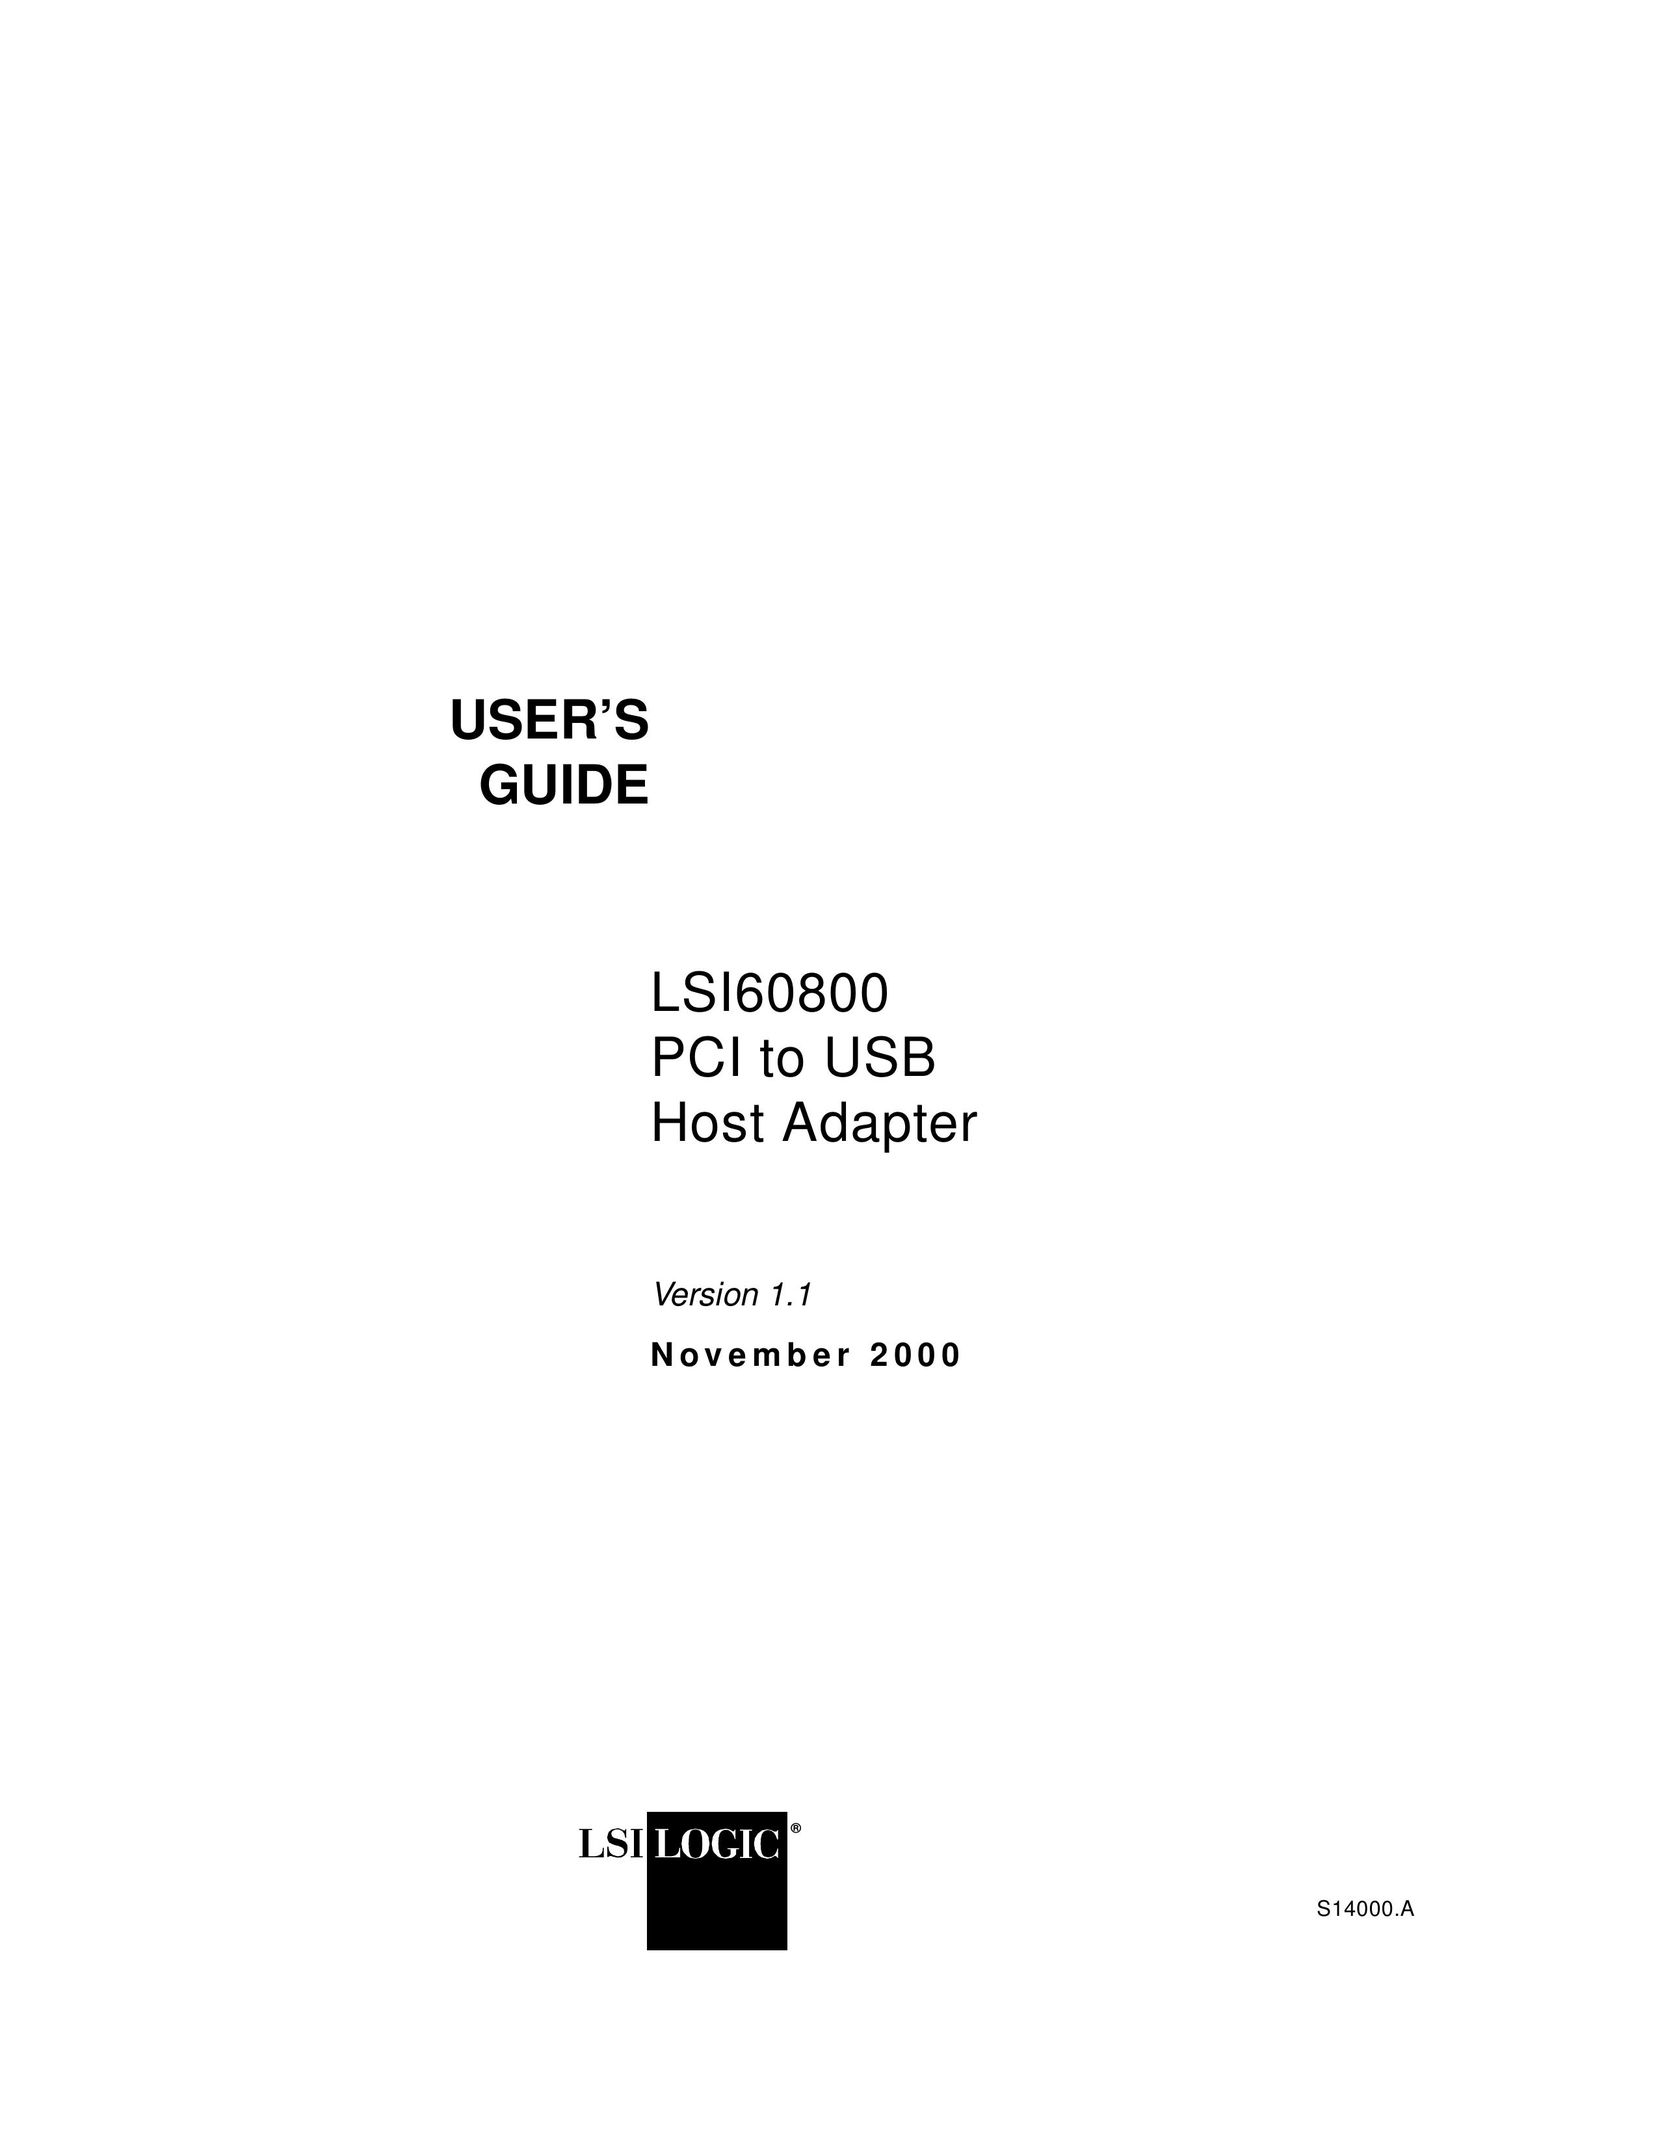 LSI 60800 Network Card User Manual